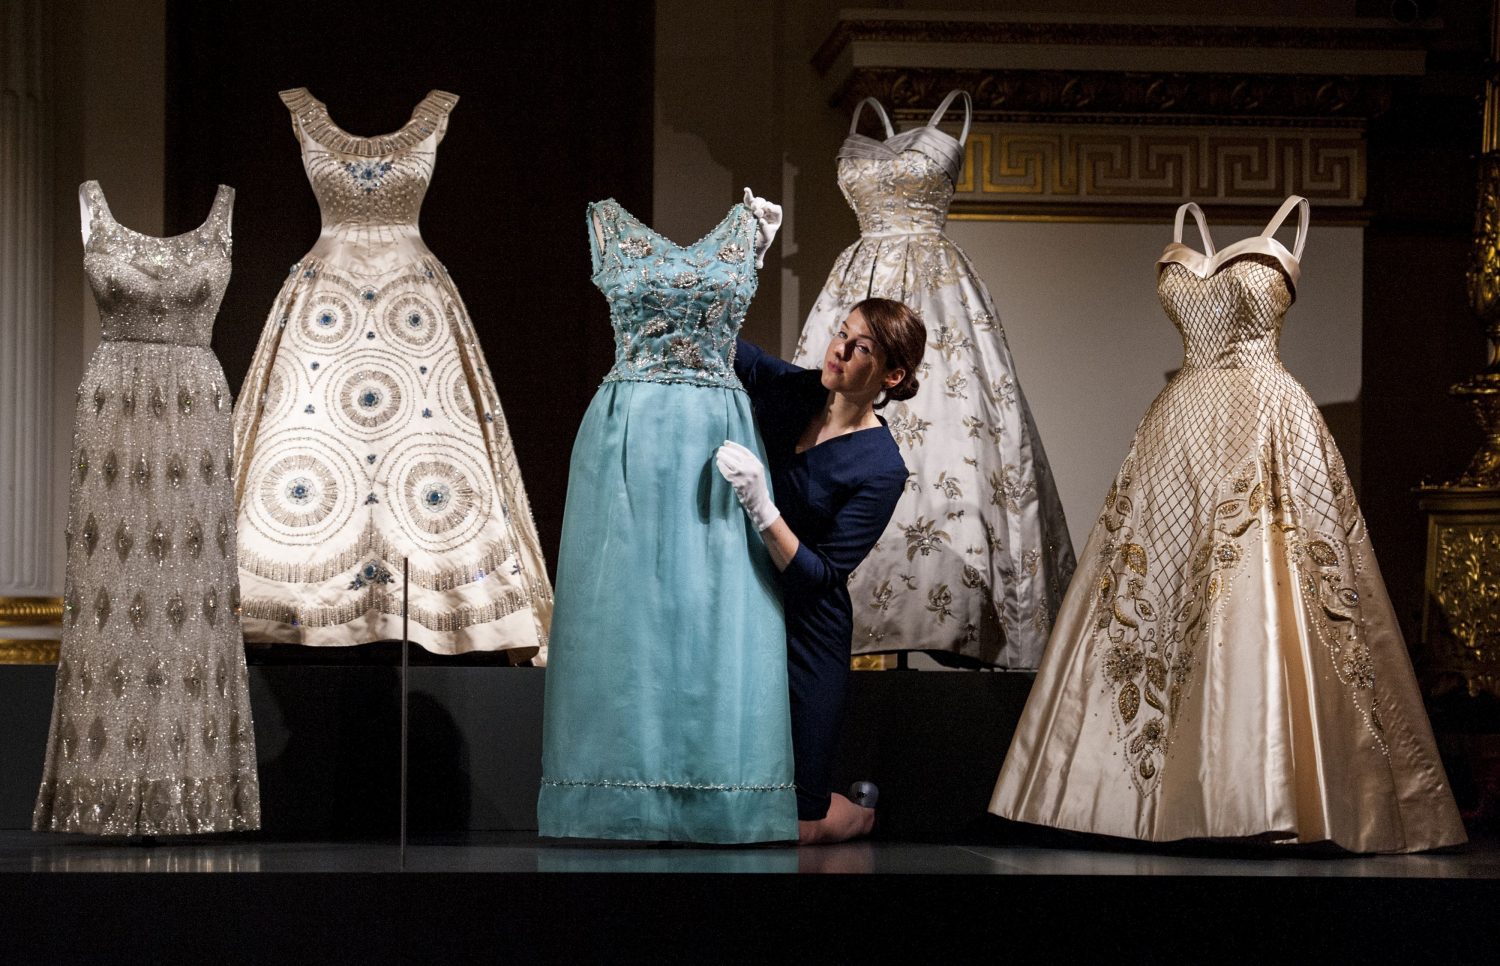 Espectacular exposición de la ropa de la Reina Isabel II | Infogate